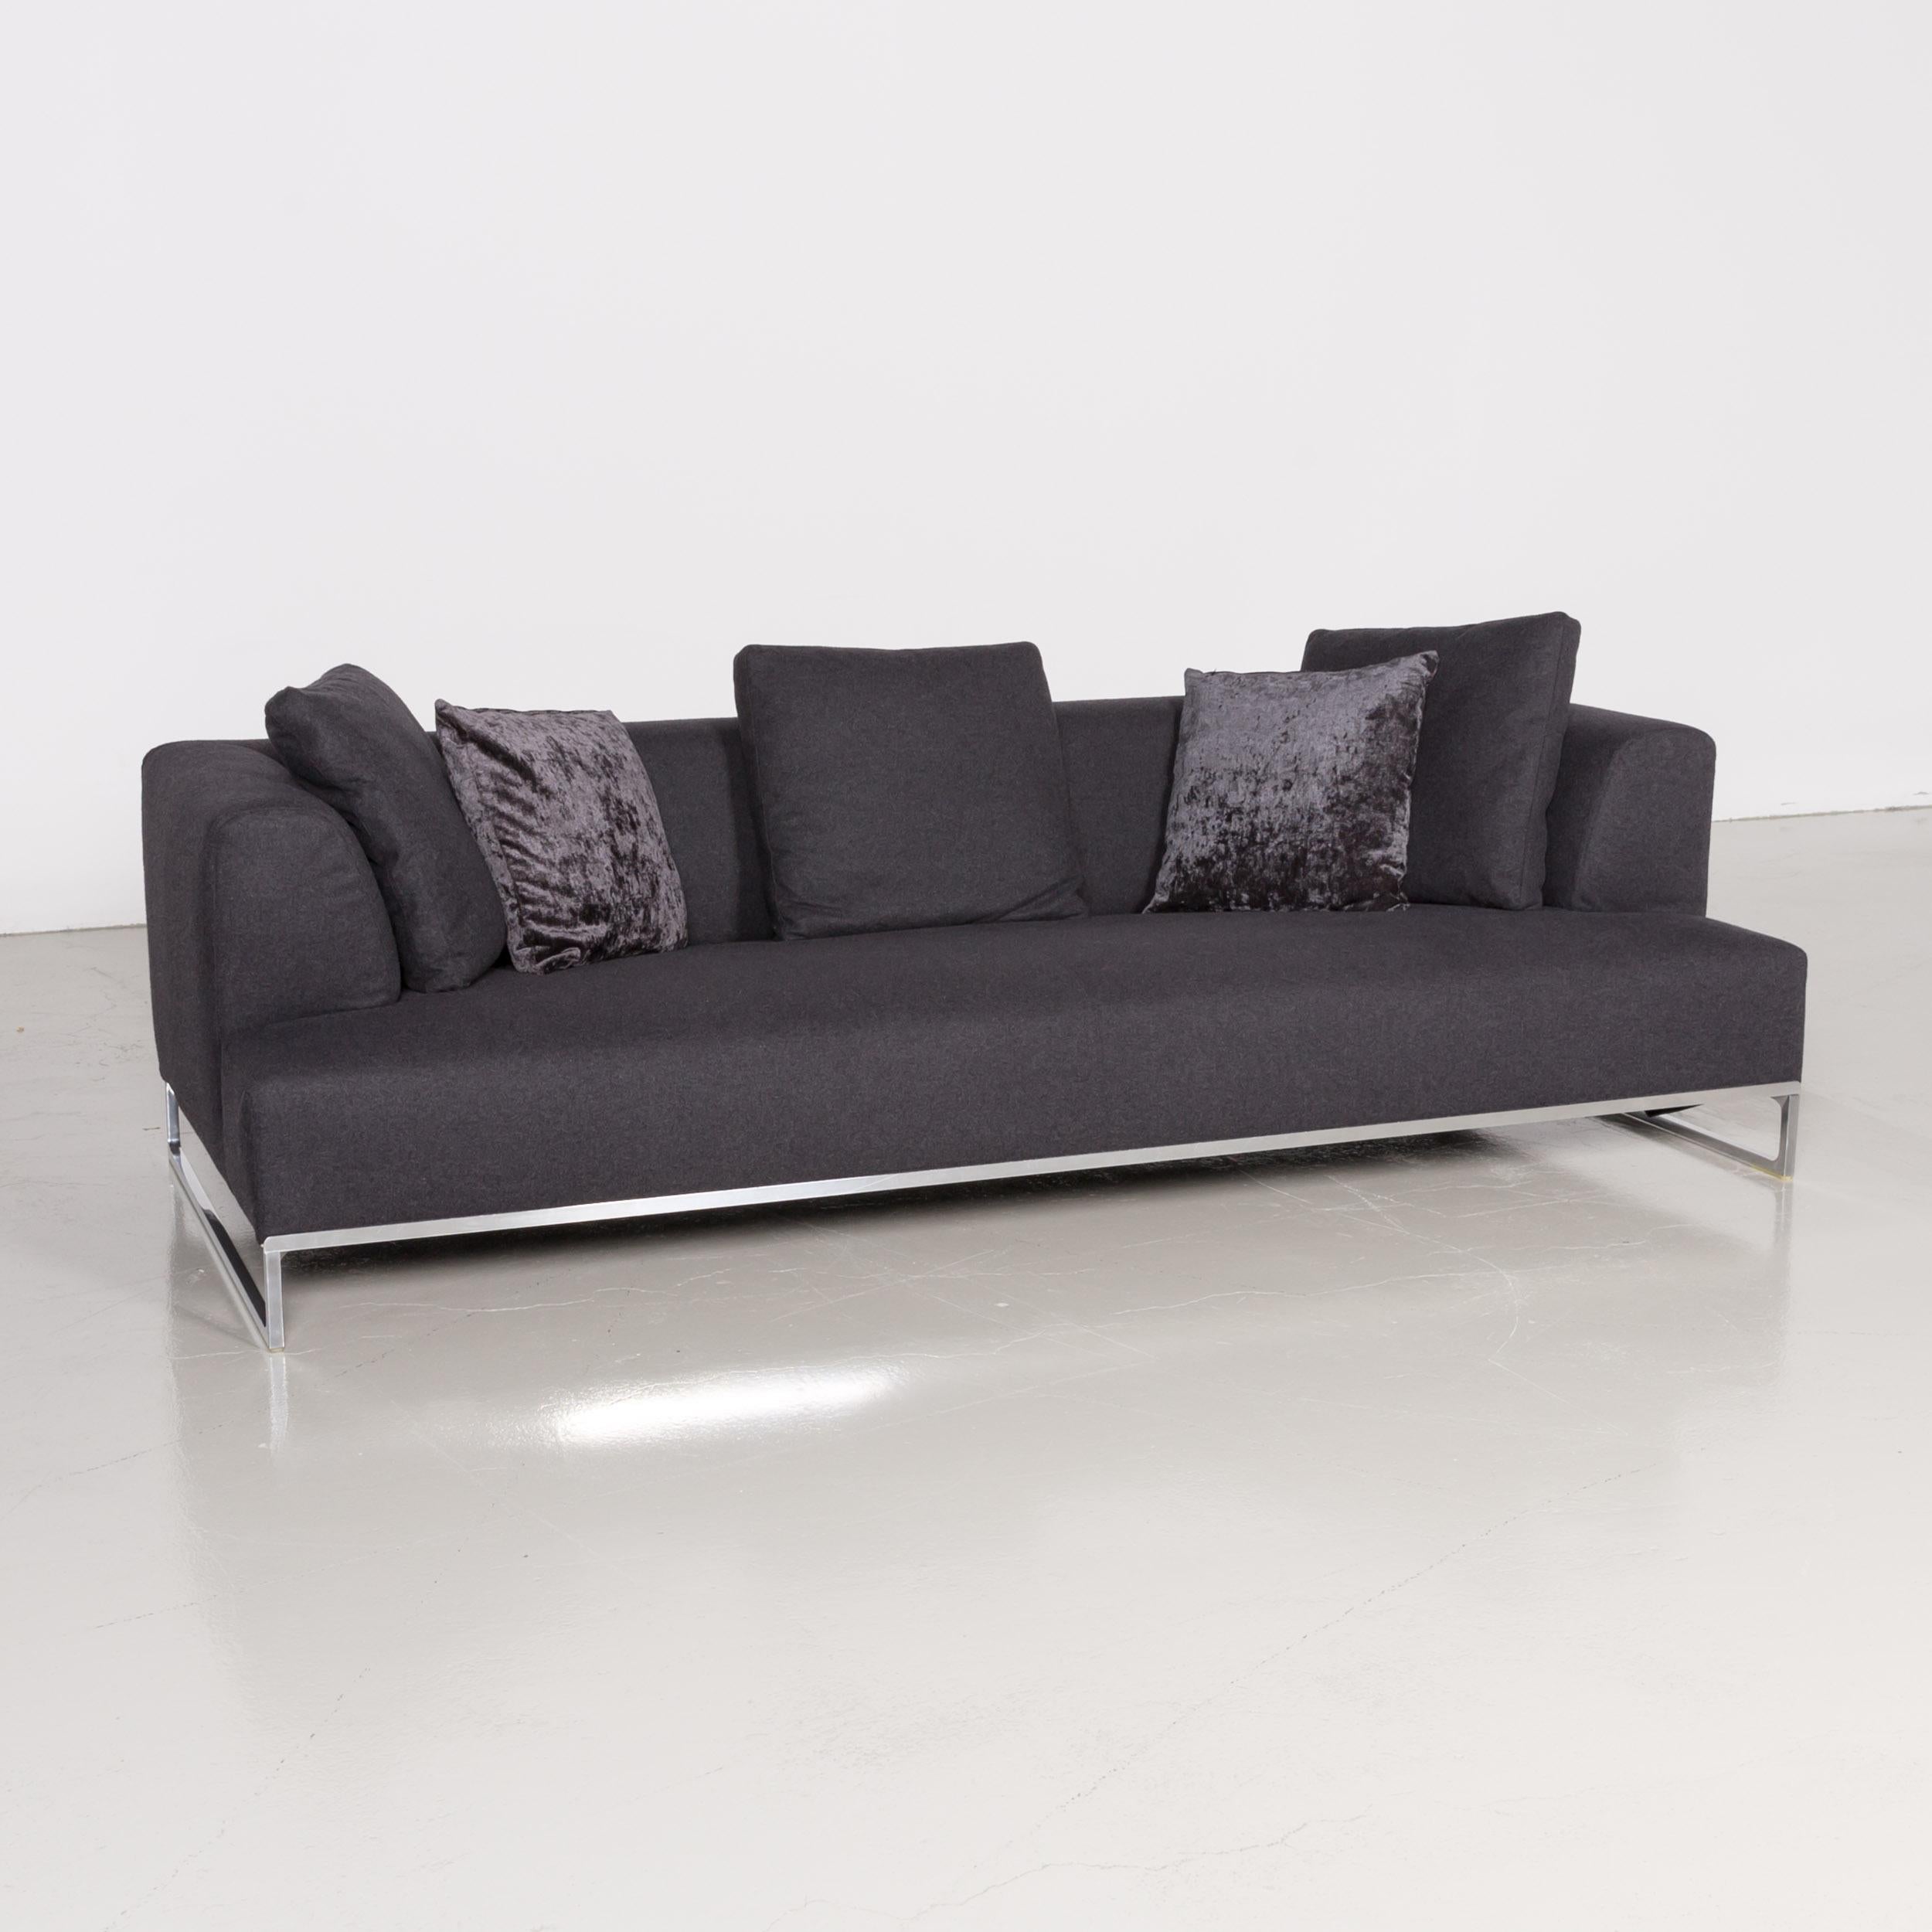 B&B Italia Solo fabric designer sofa three-seat couch blue anthracite grey.